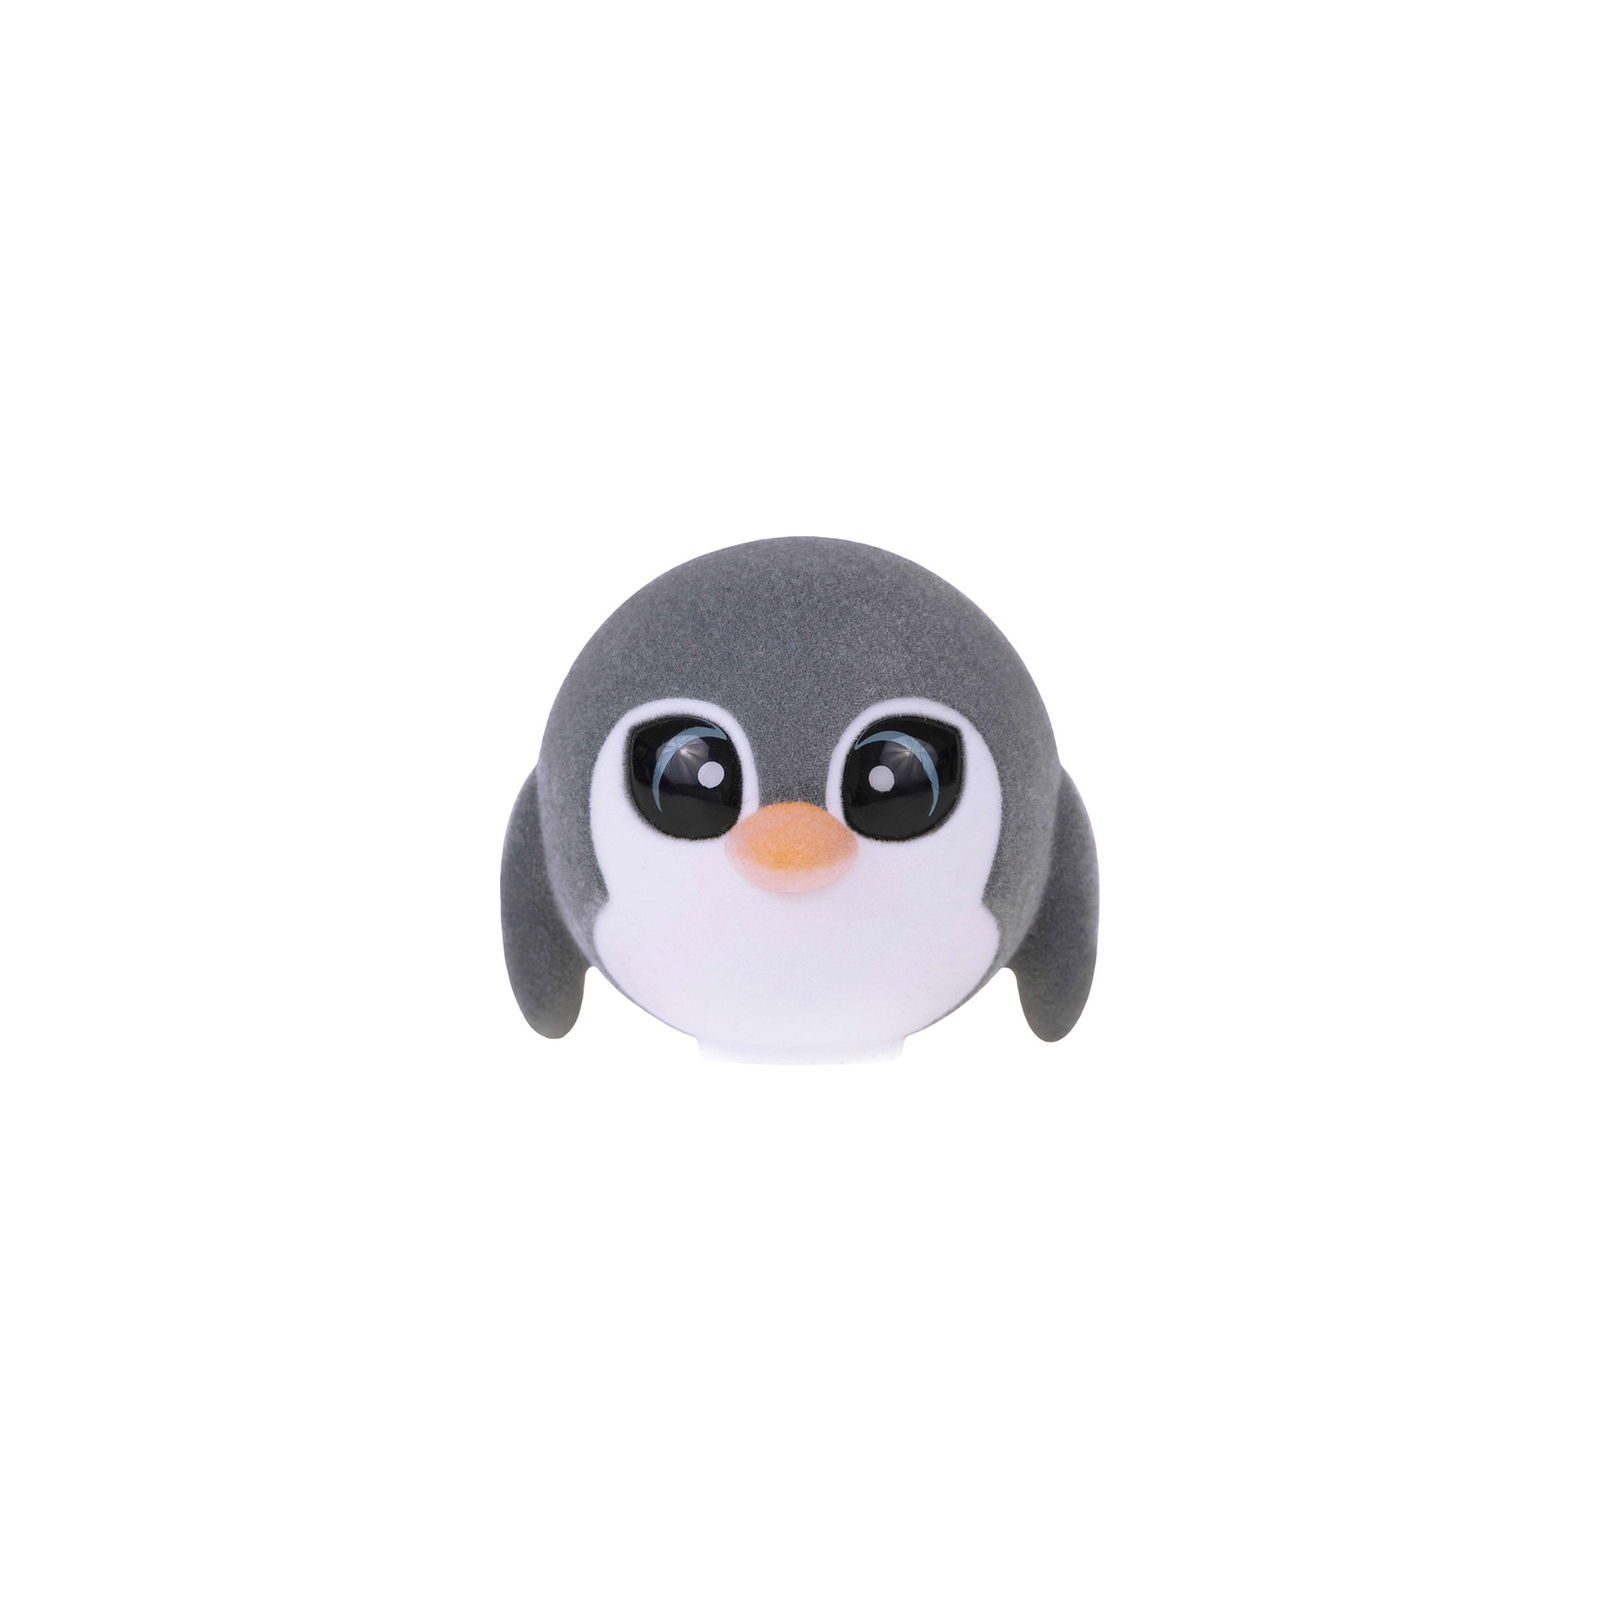 Фигурка Flockies S2 - Пингвин Филипп (FLO0410) изображение 2